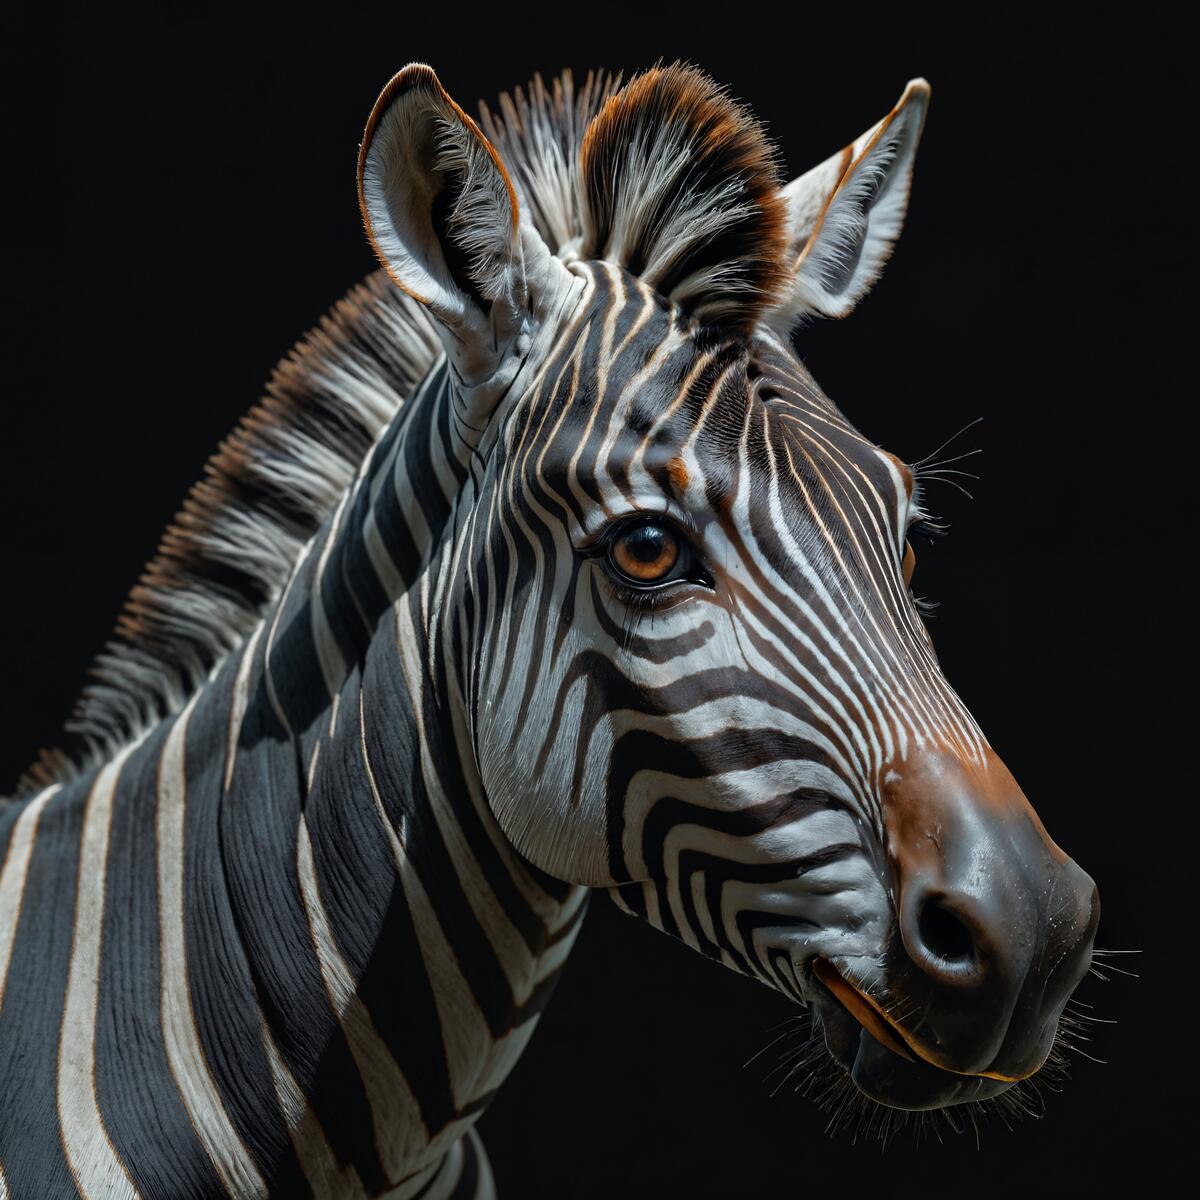 Portrait from the zebra